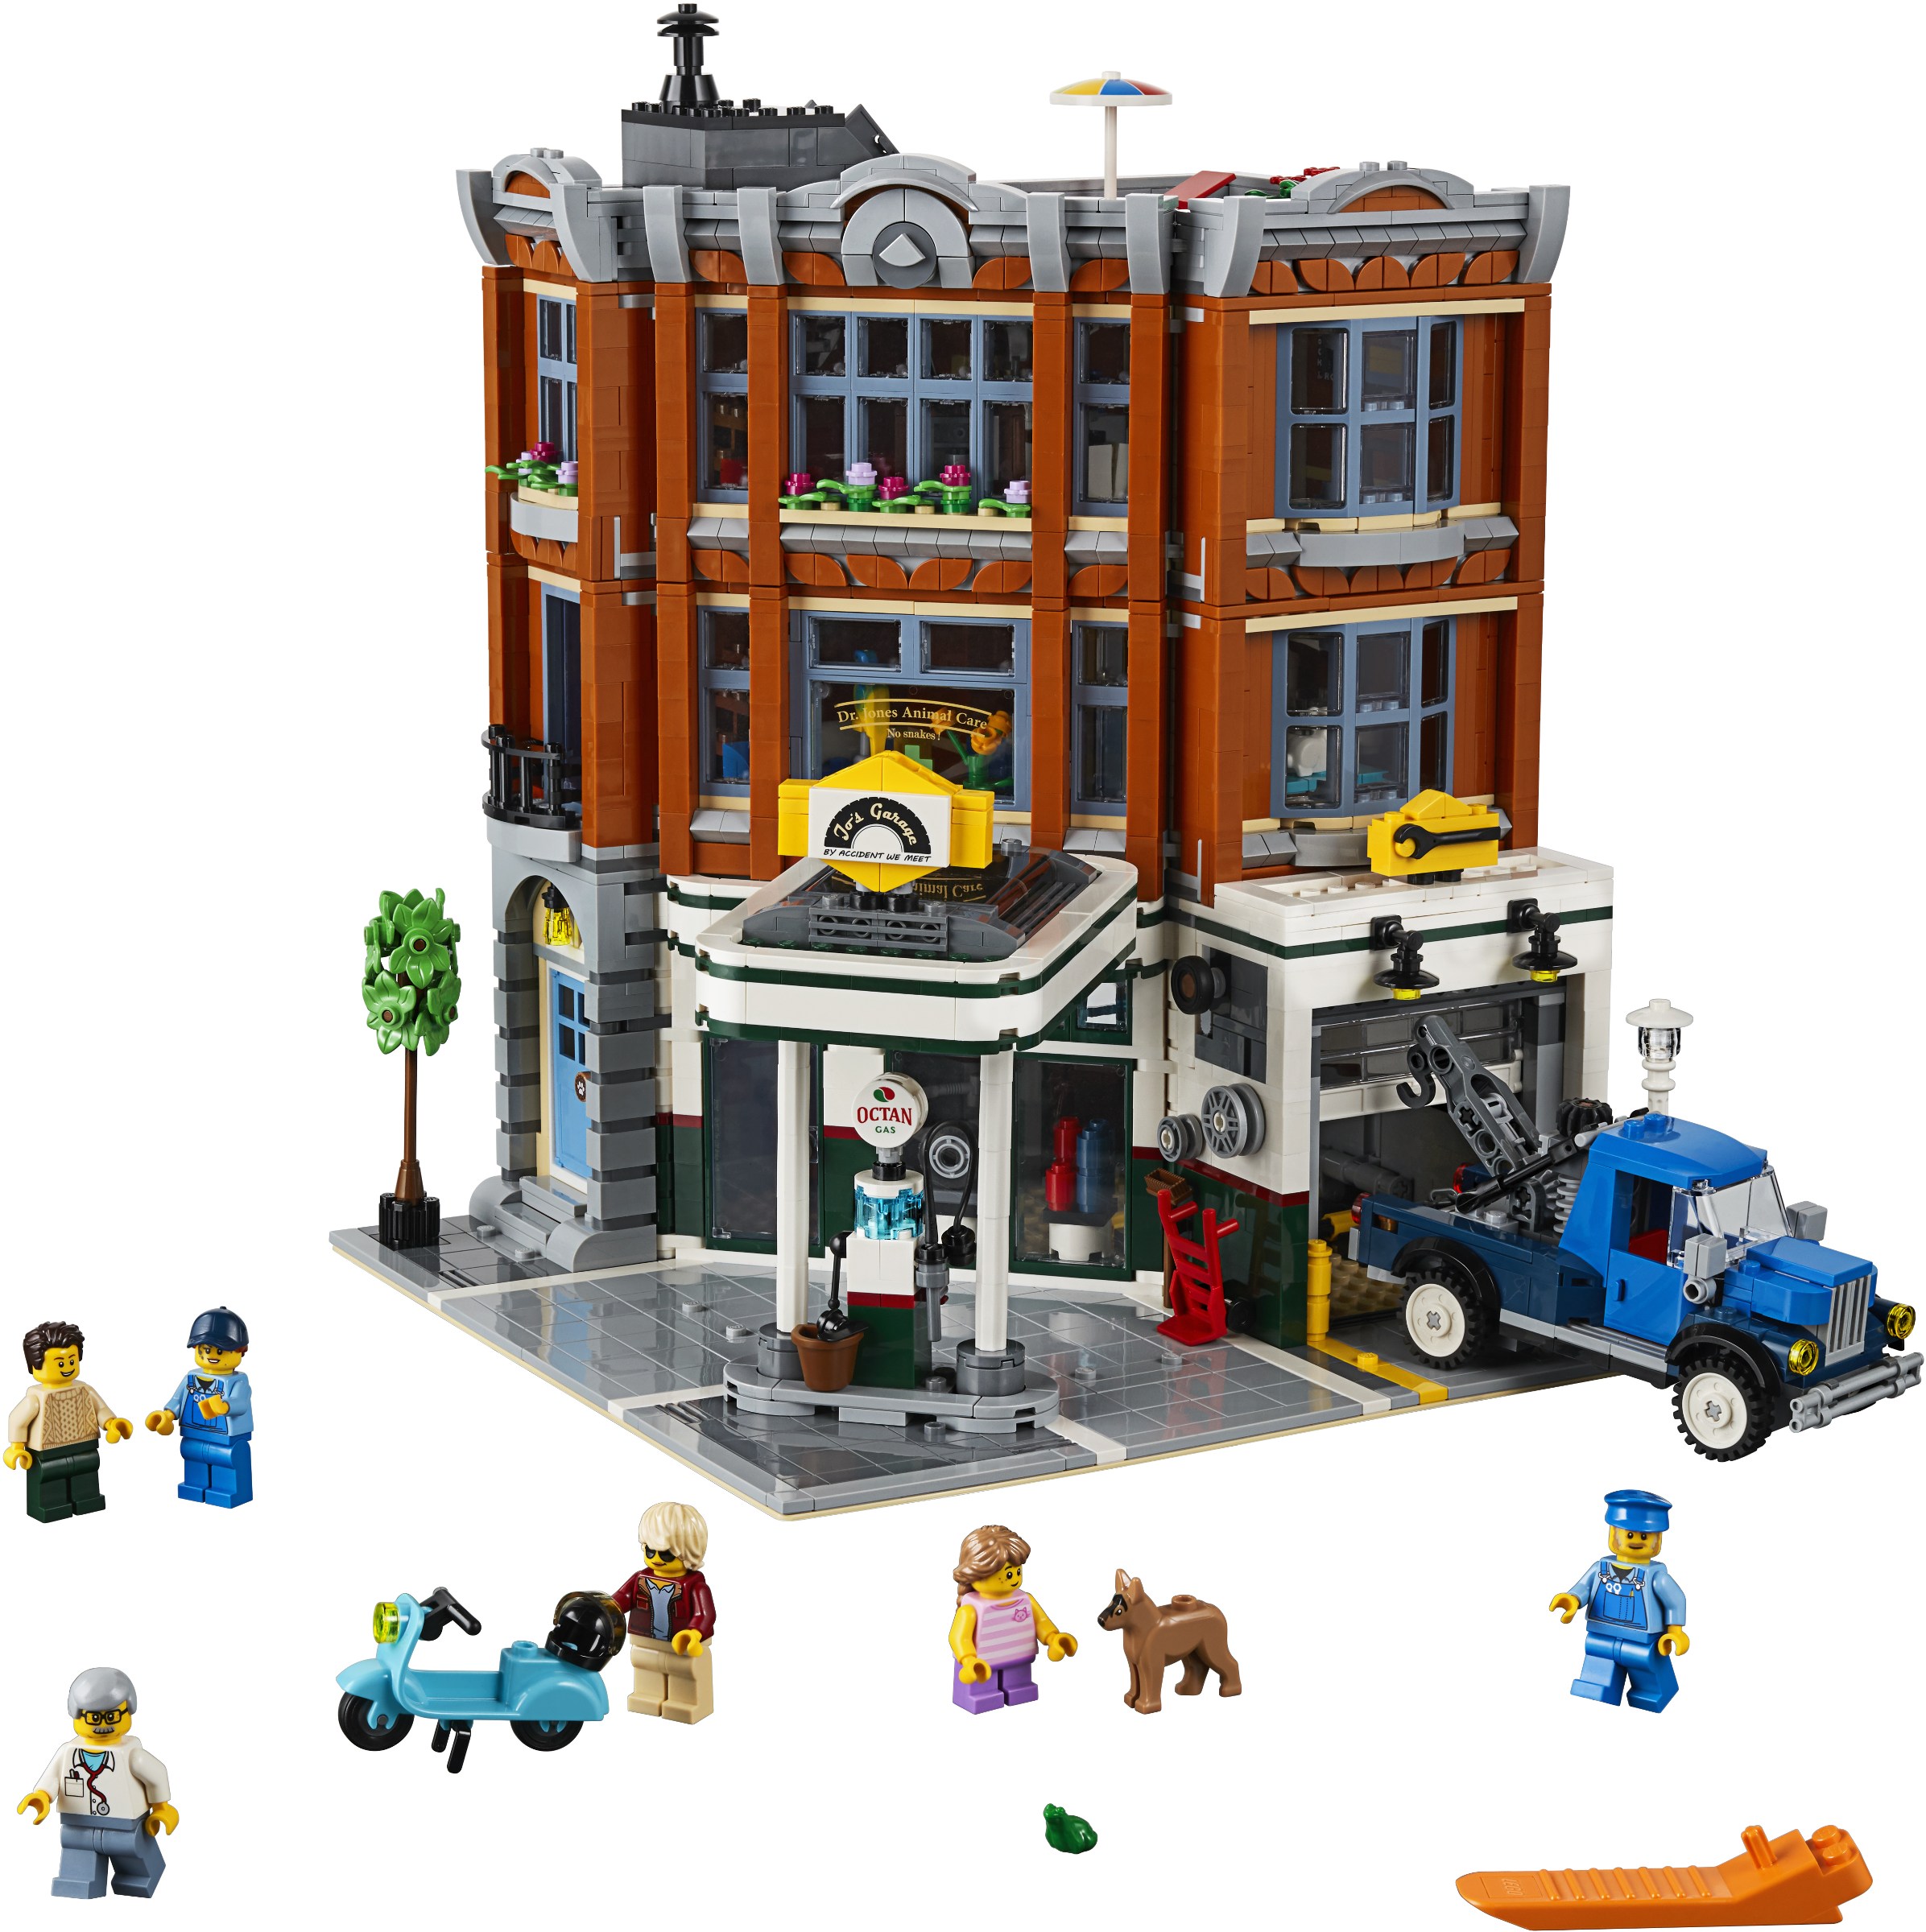 2019 | Brickset: LEGO set guide and 